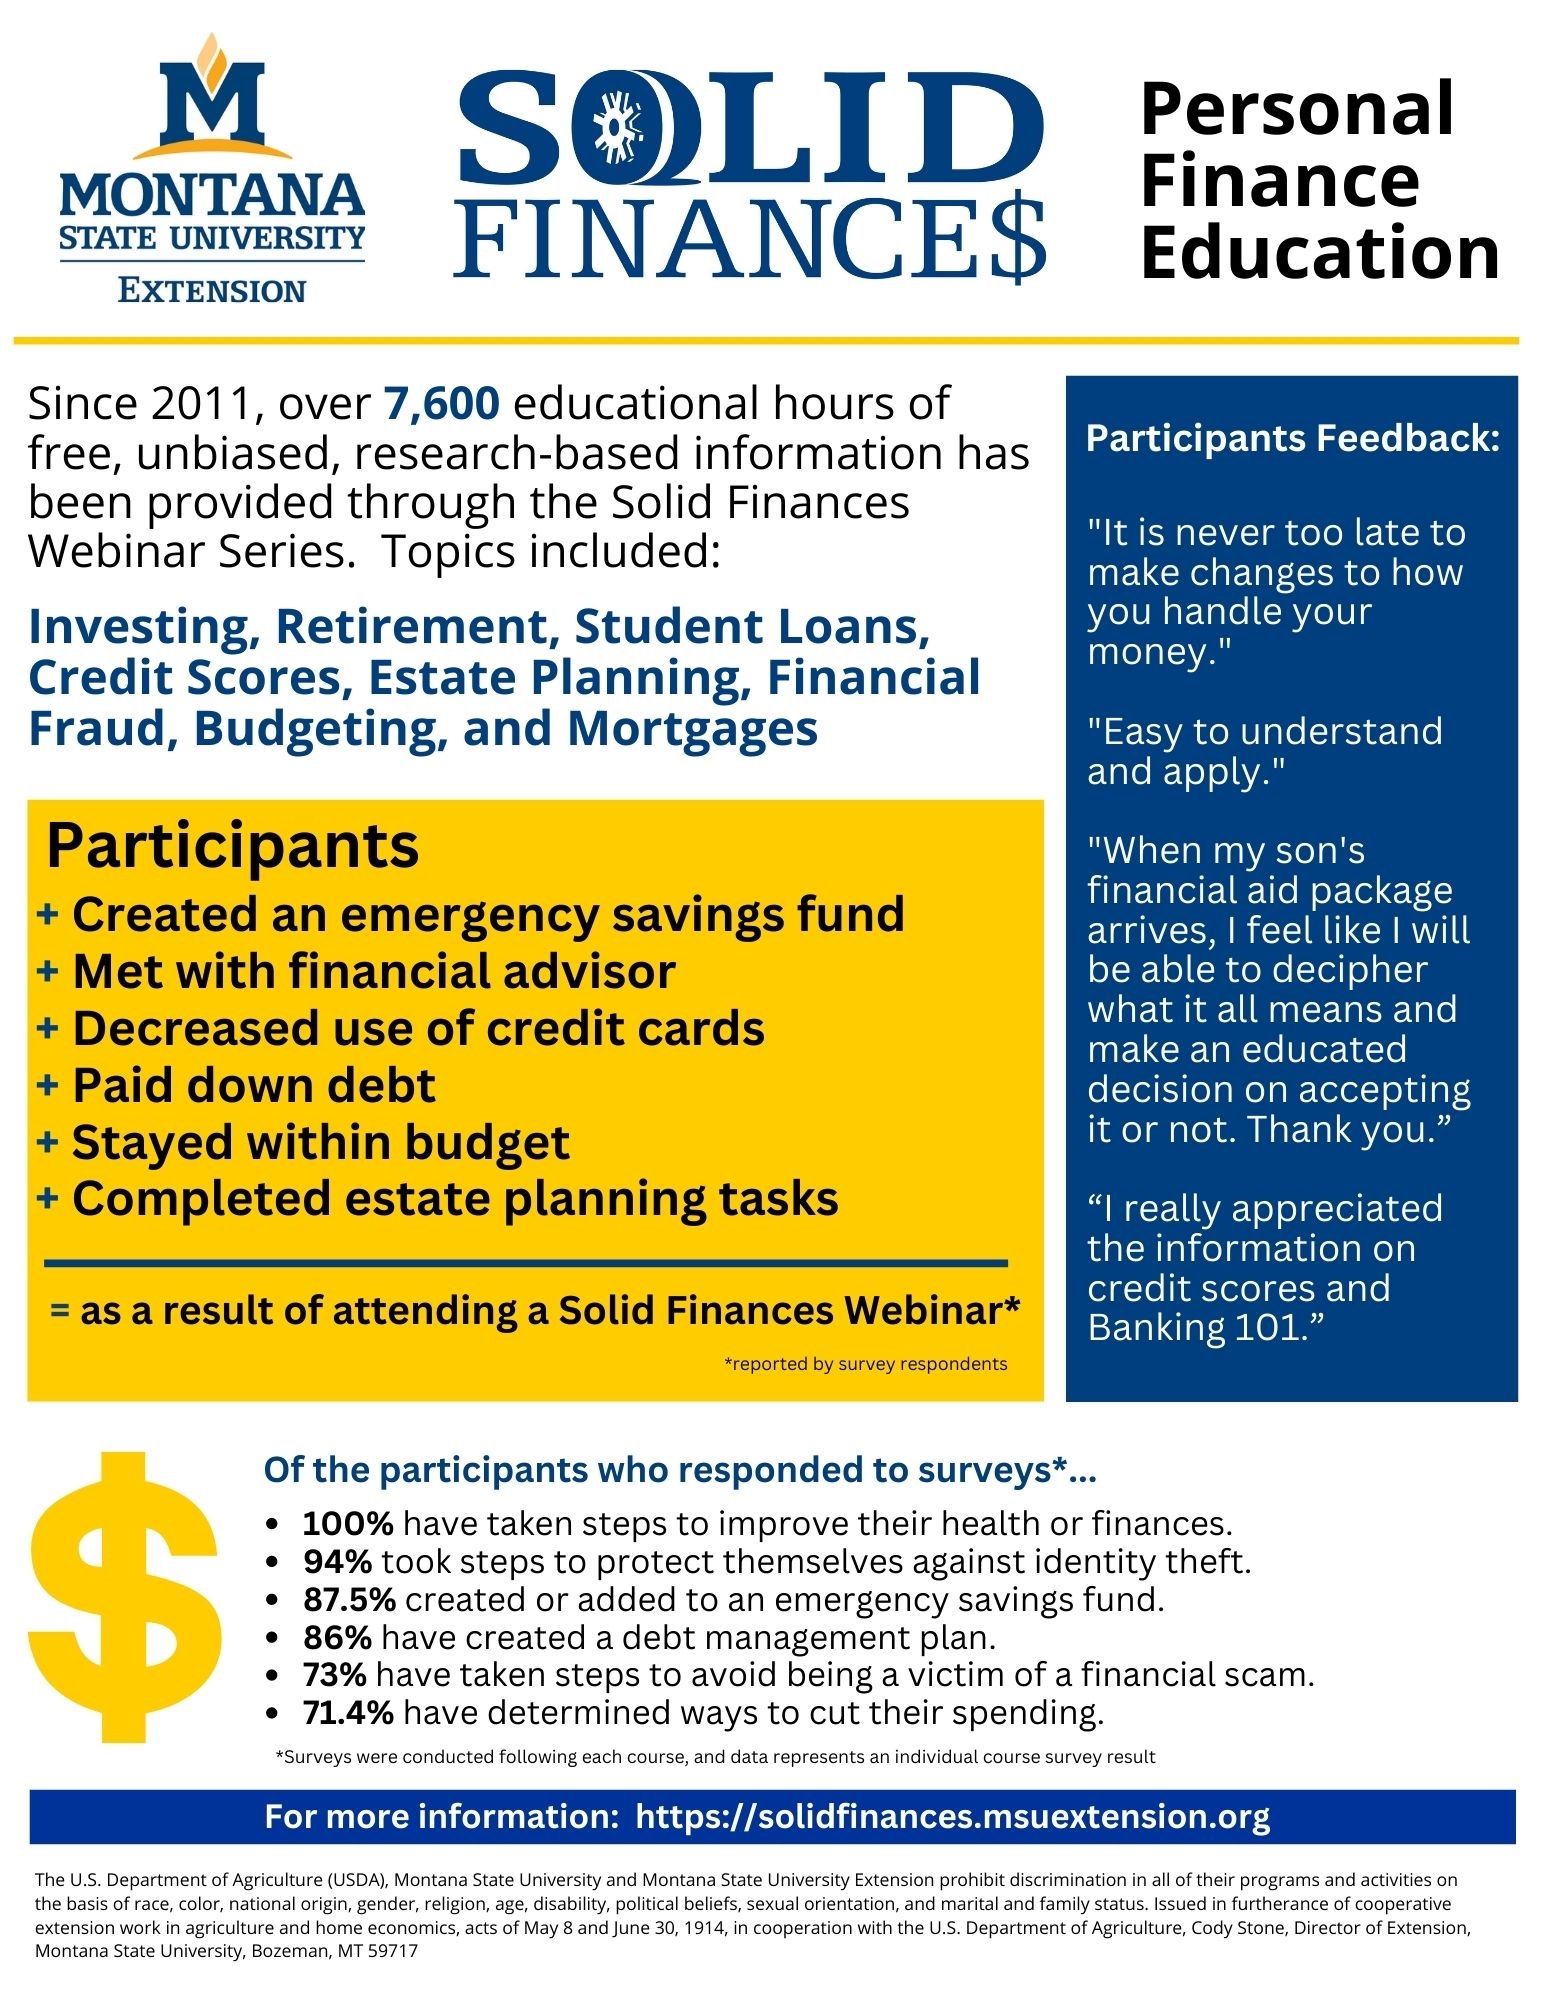 solid finances impact report image